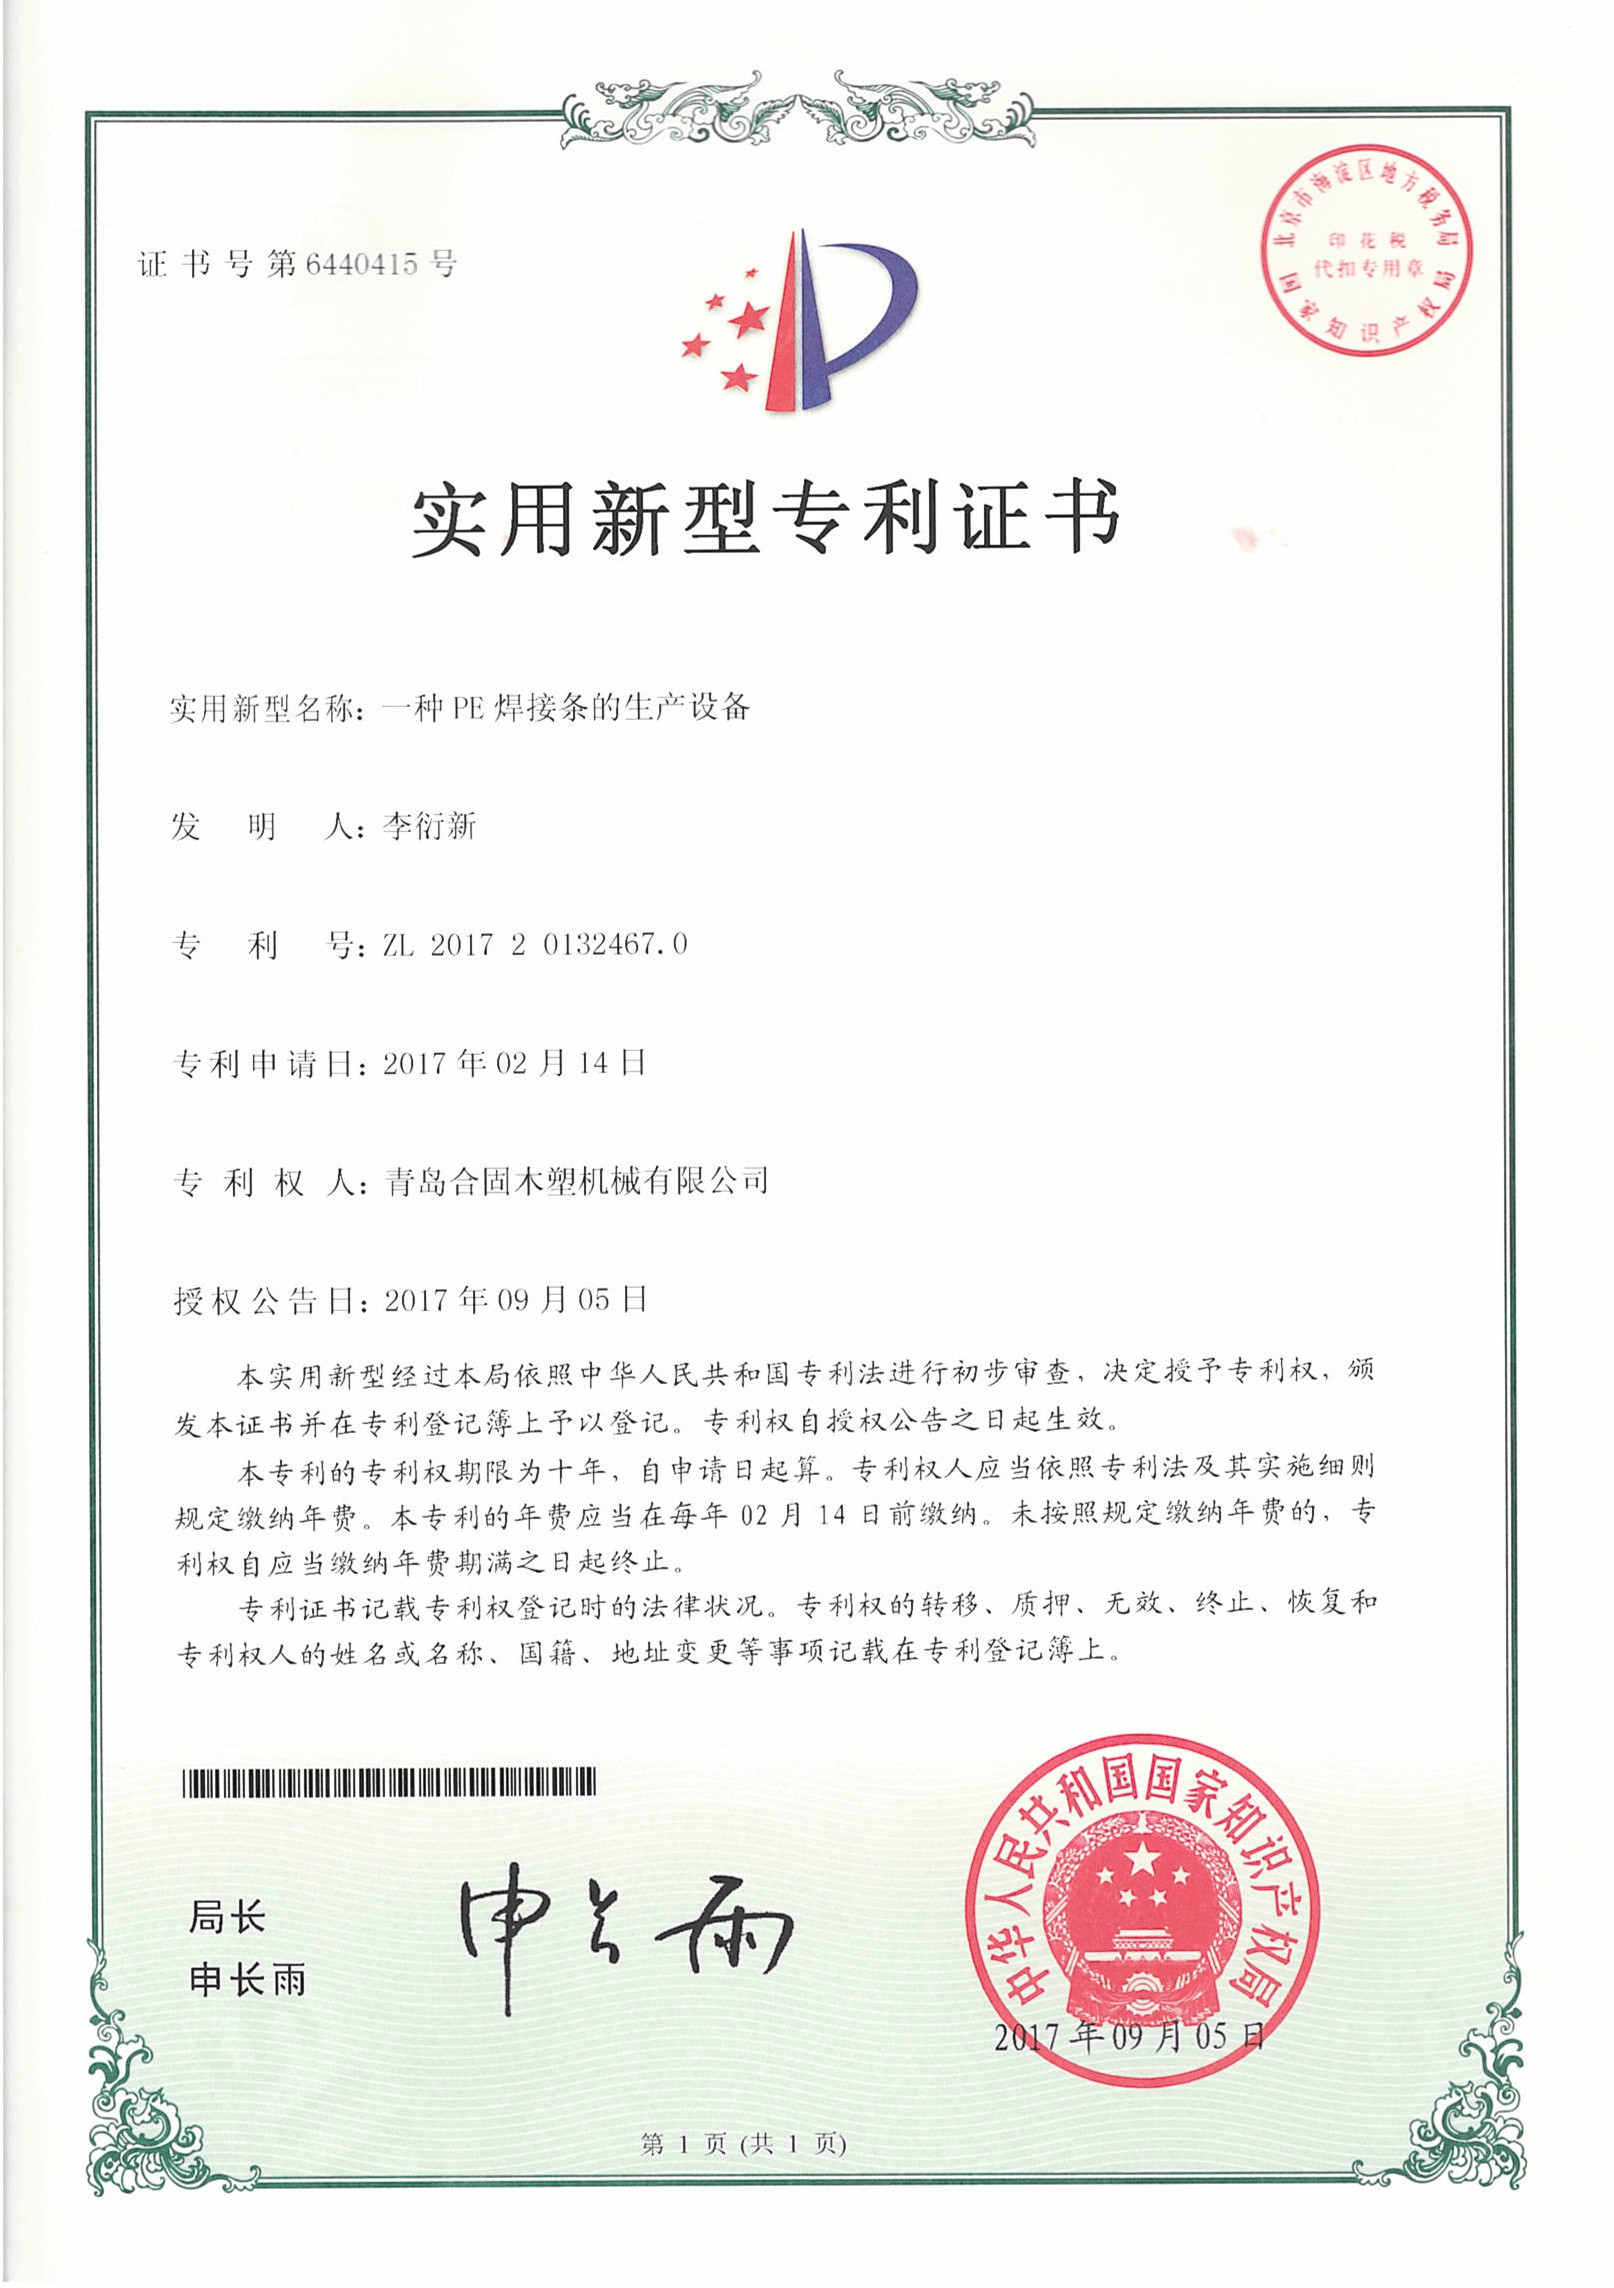 HEGU Letters Patent